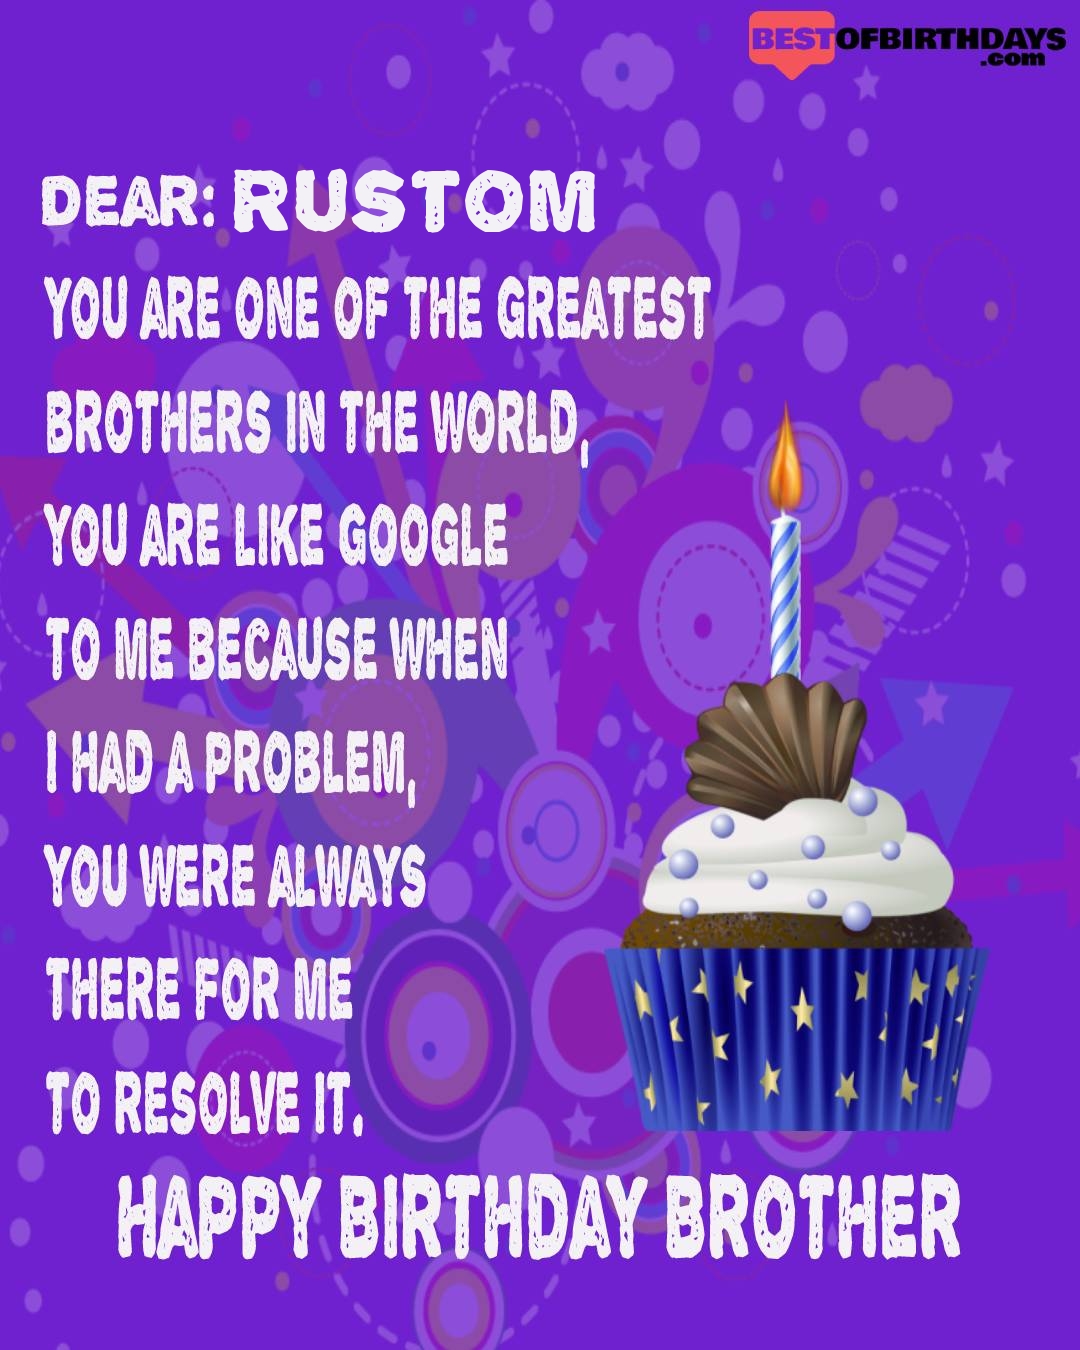 Happy birthday rustom bhai brother bro